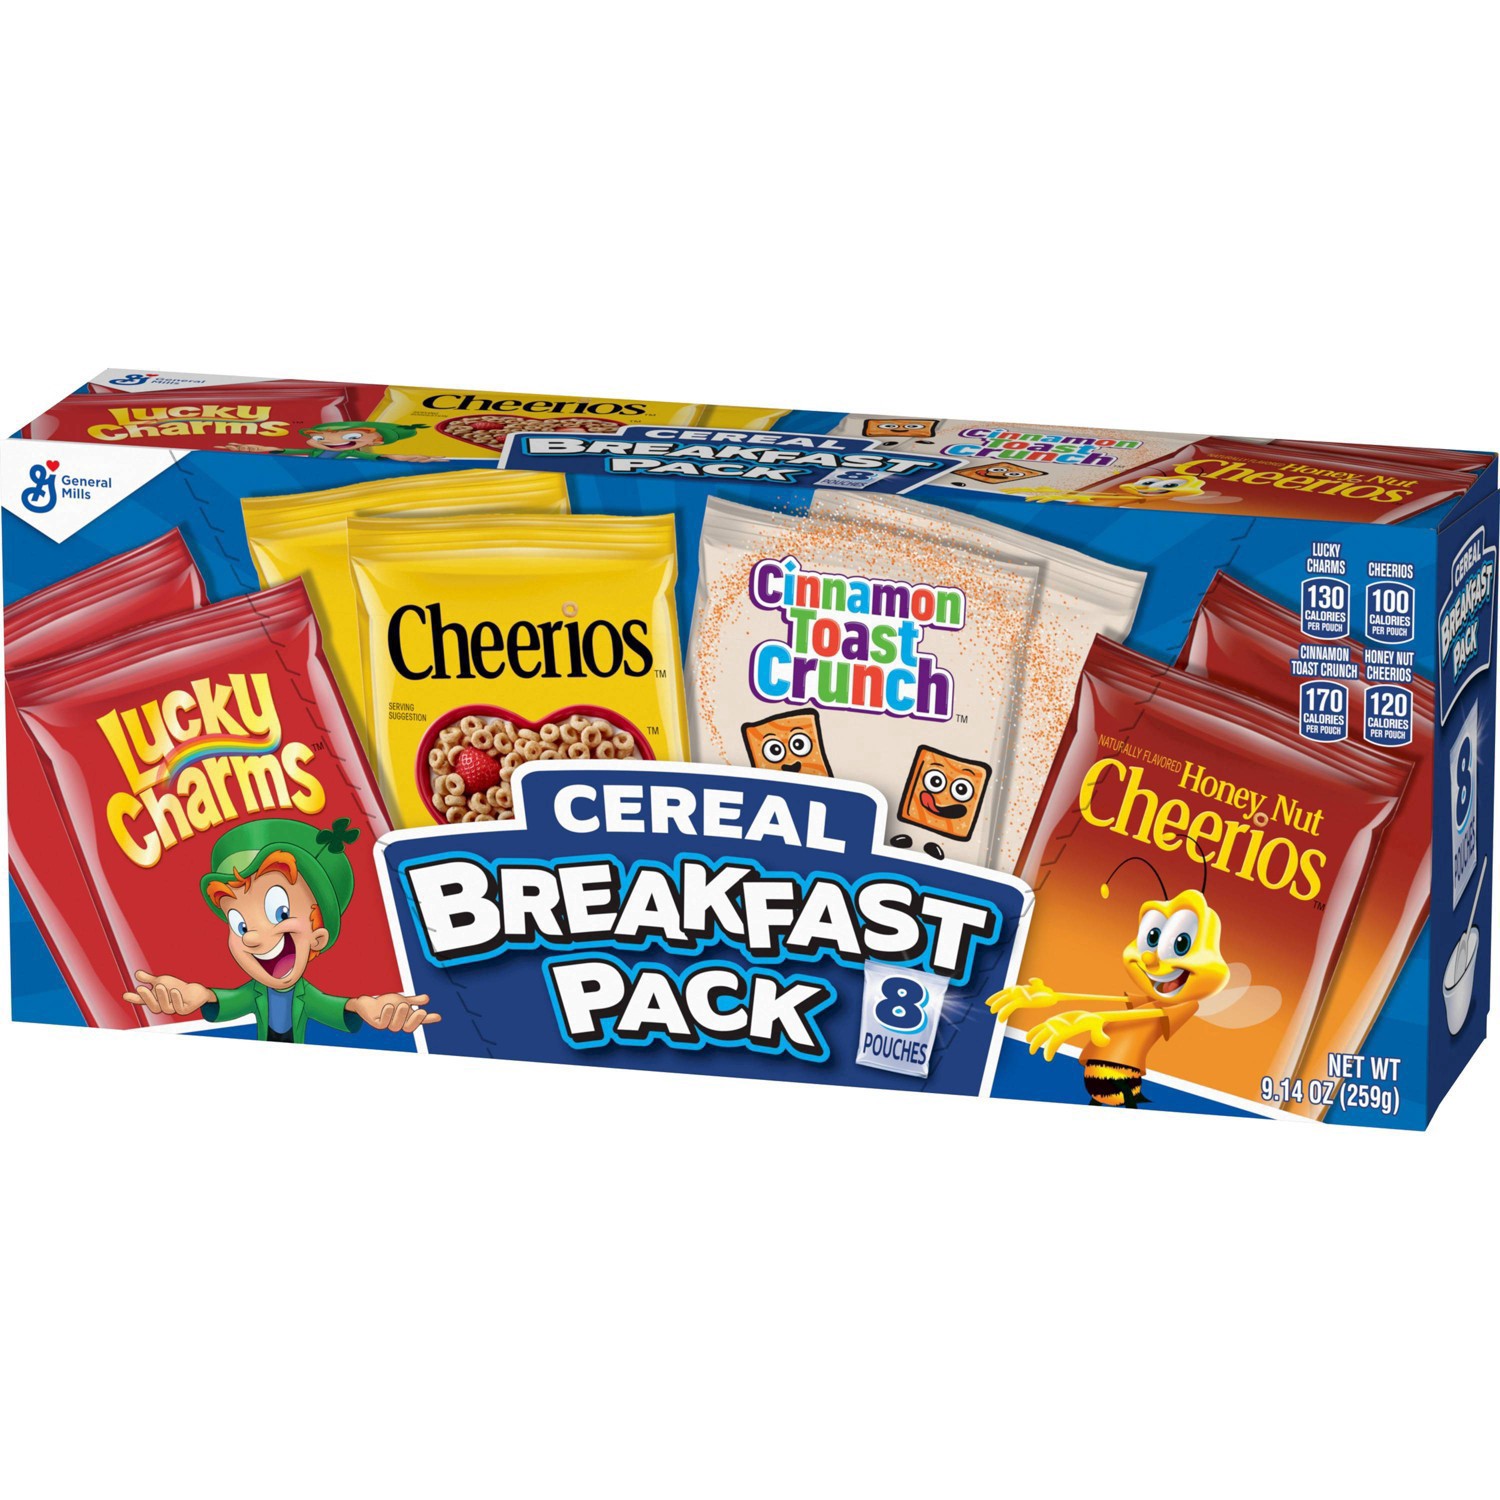 slide 14 of 141, General Mills Breakfast Pack Cereal, 8 ct